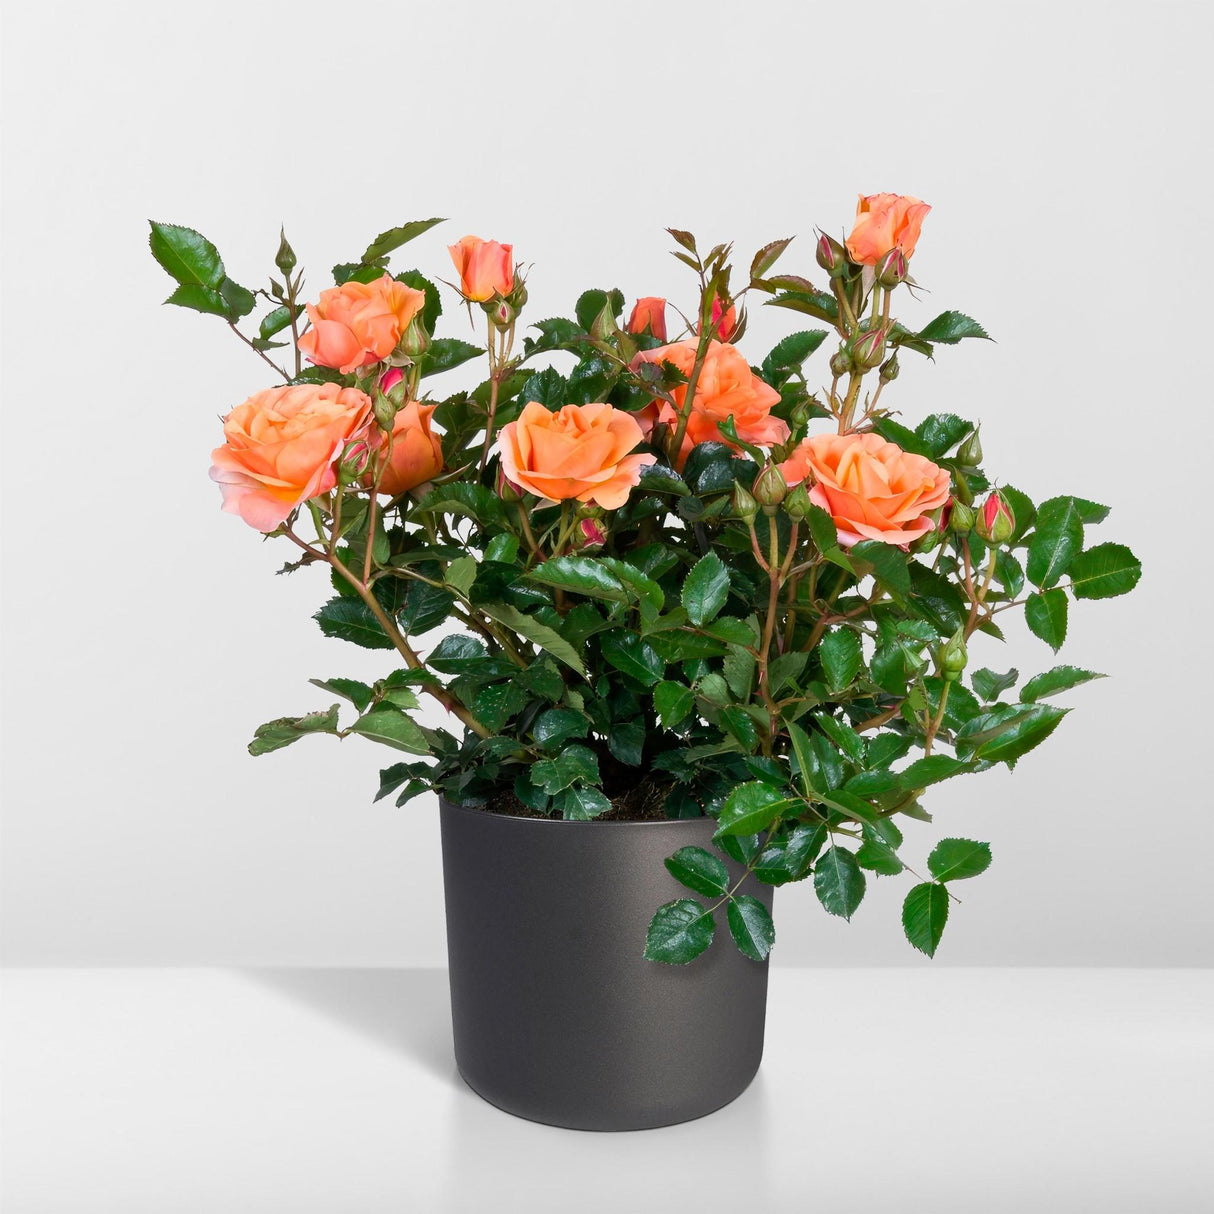 Orange rose bush - outdoor flowering plant